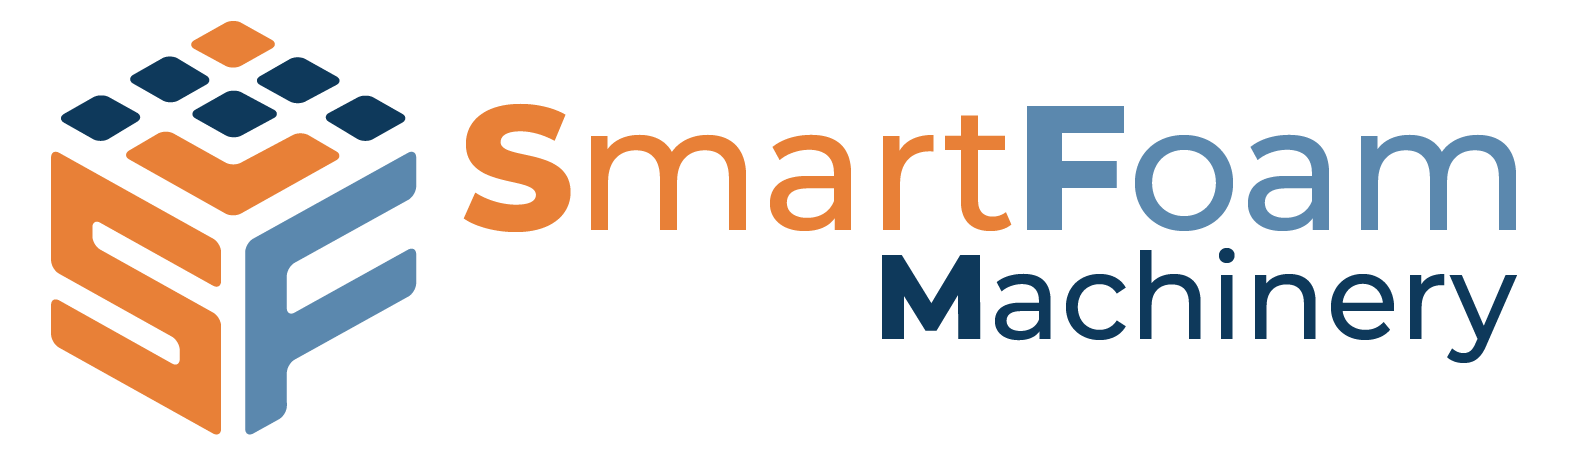 Smartfoam Machinery logo